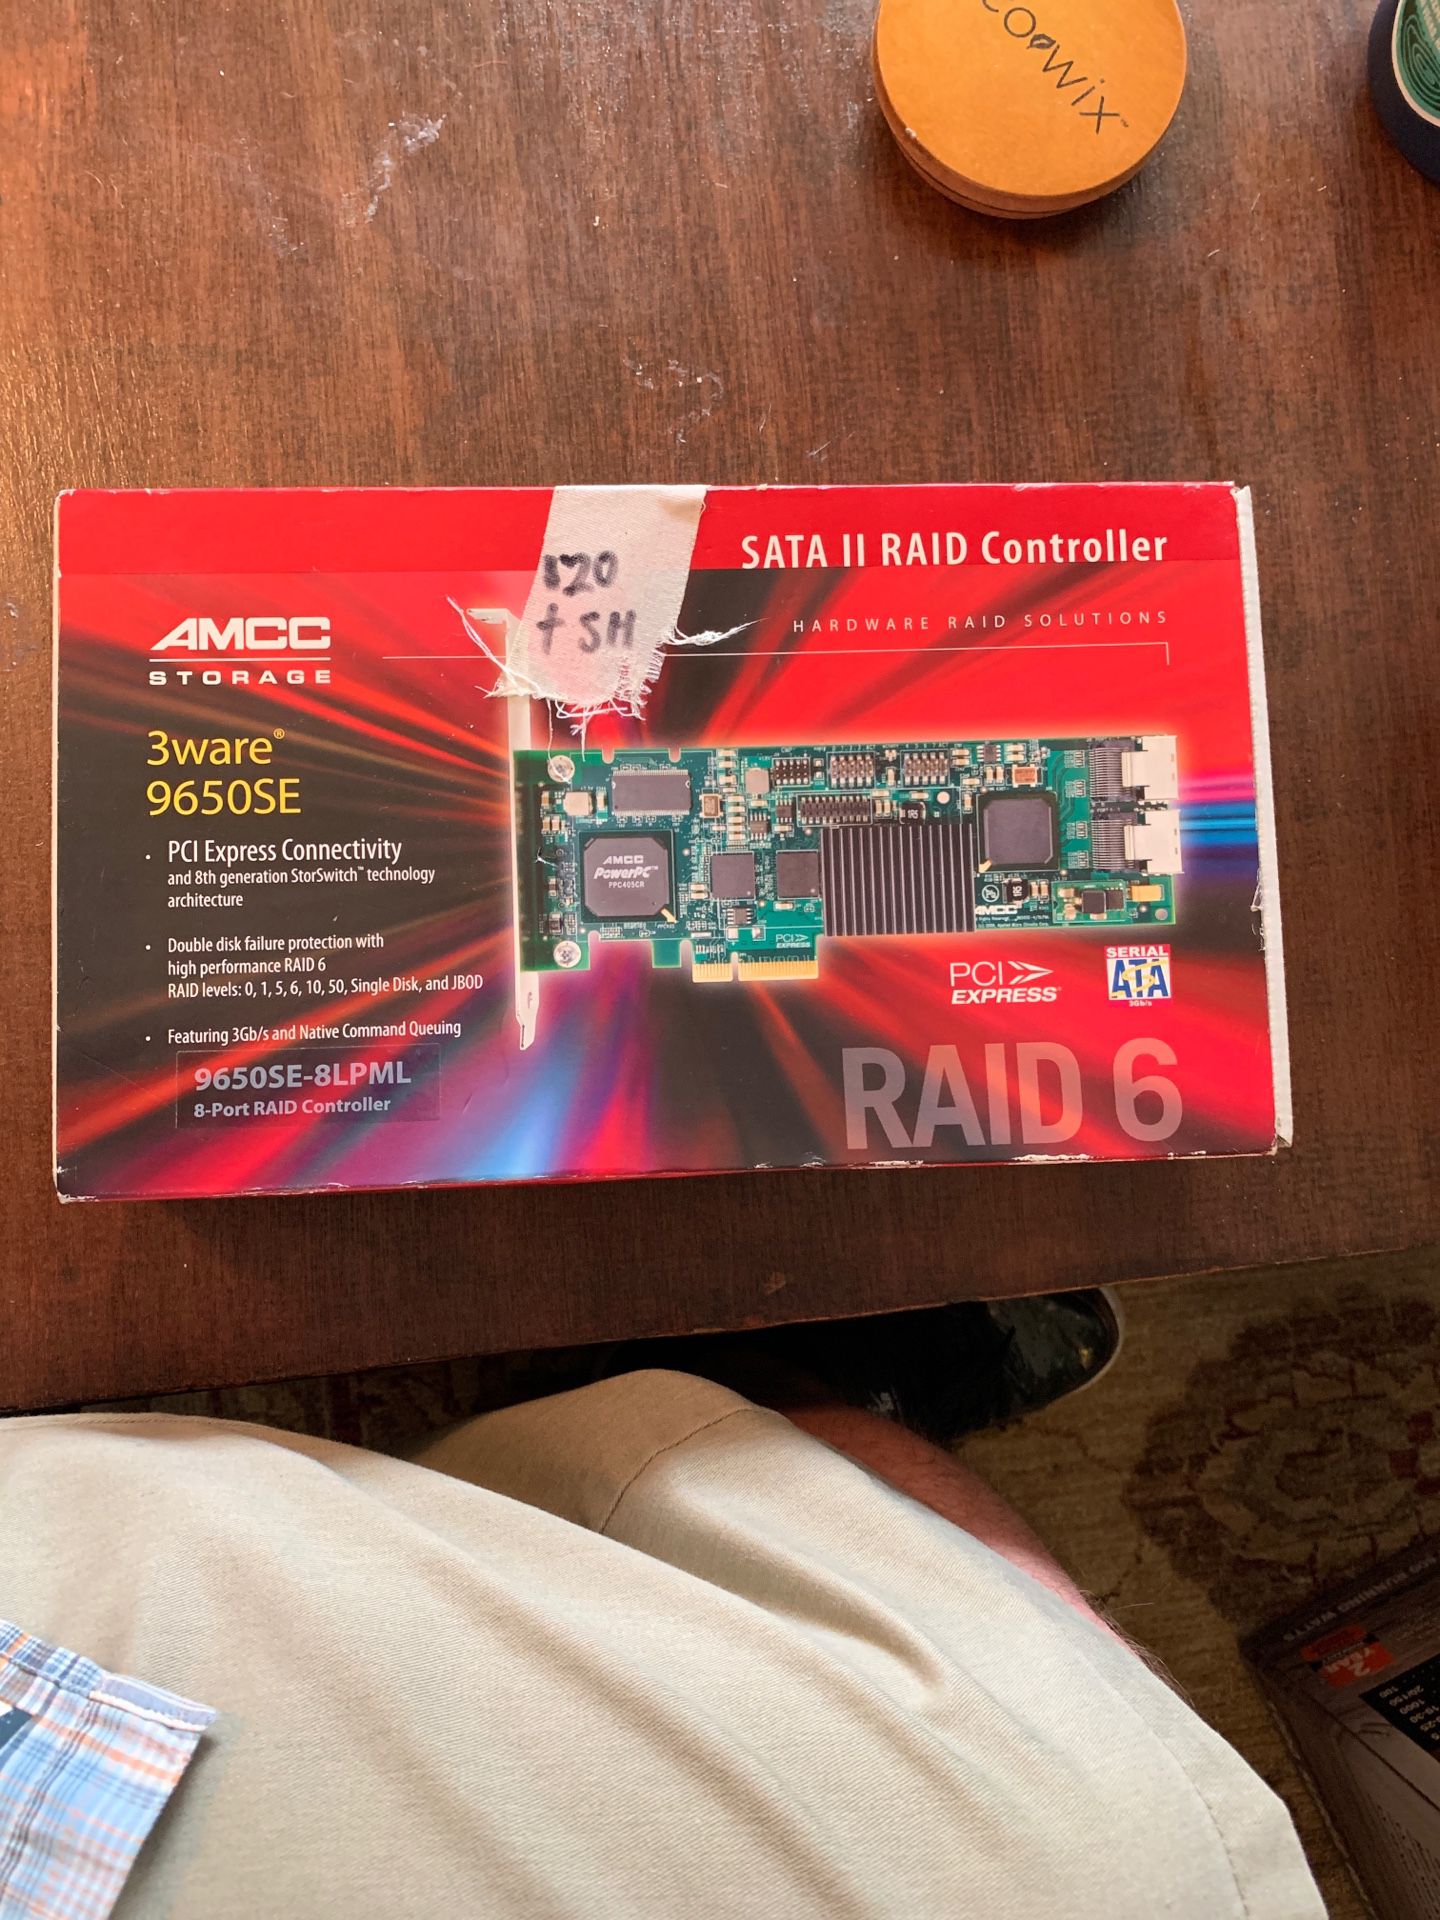 AMCC storage SATA II Raid 6 controller